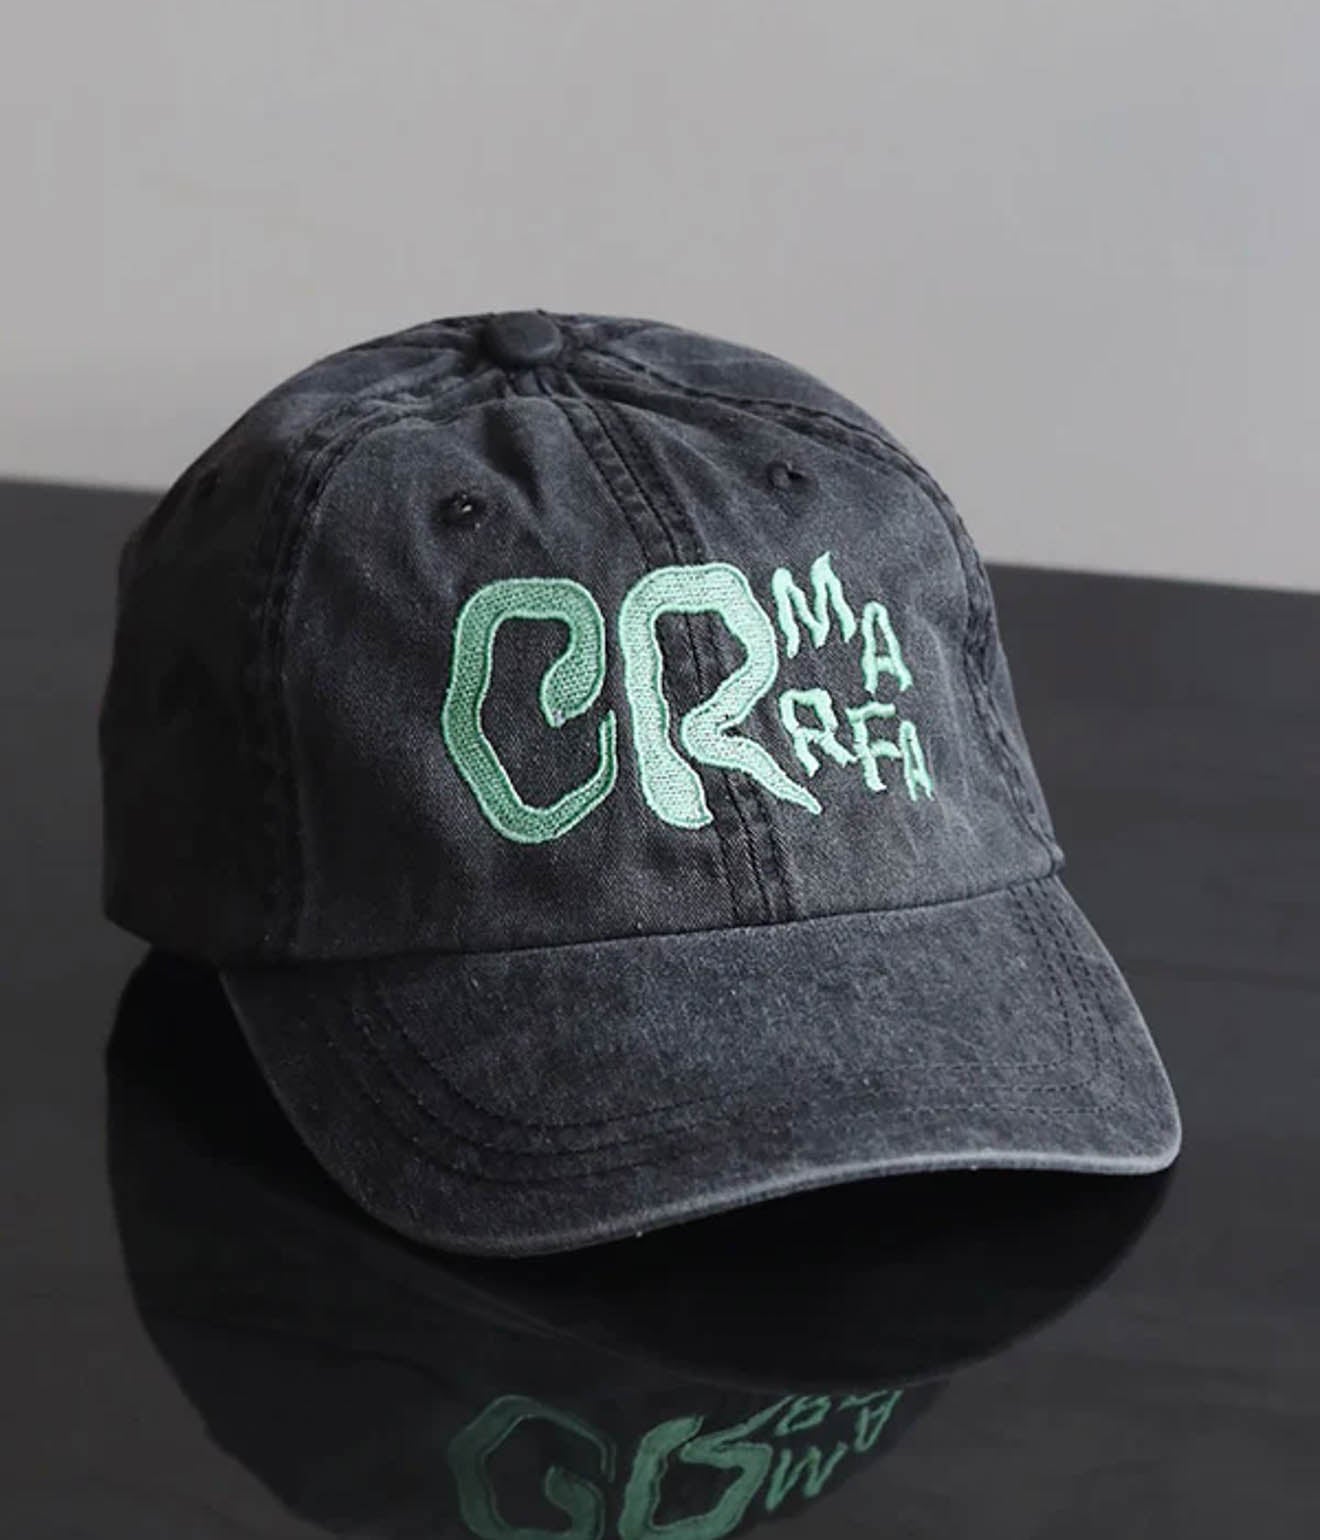 Cobra Rock "Embroidered Hat" (Fade Black)